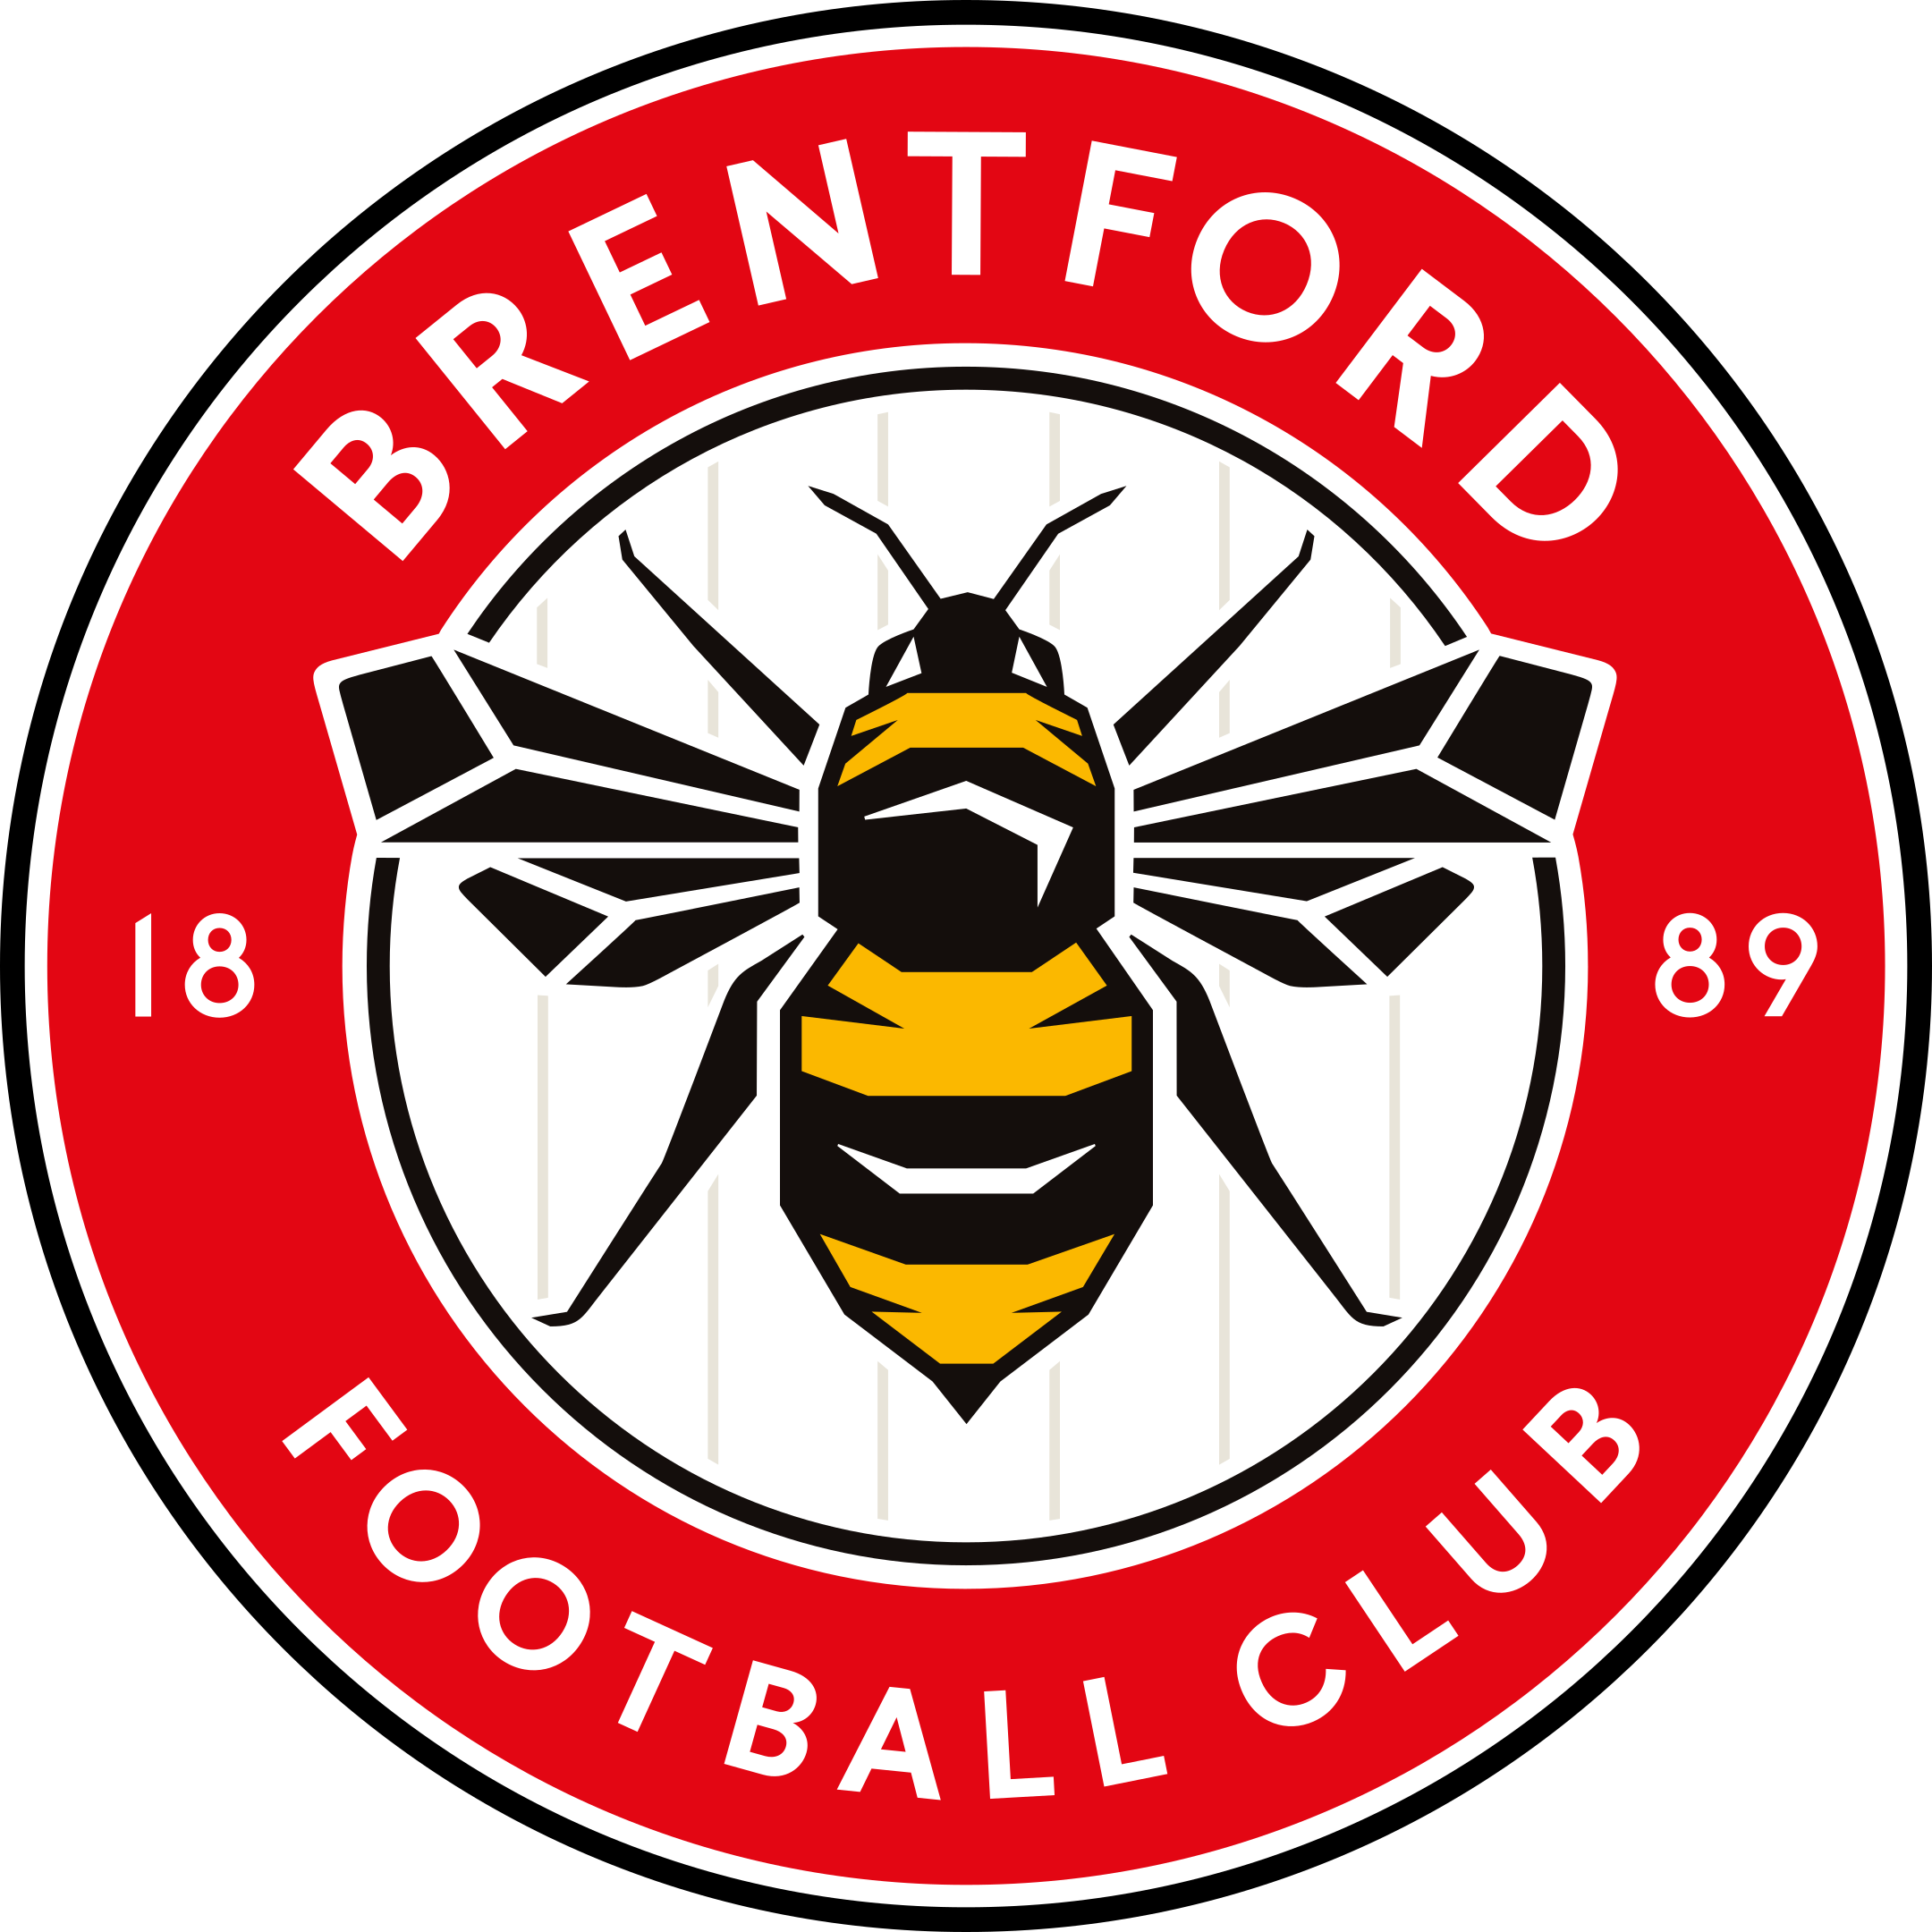 brentford fc logo 1 - Brentford FC Logo